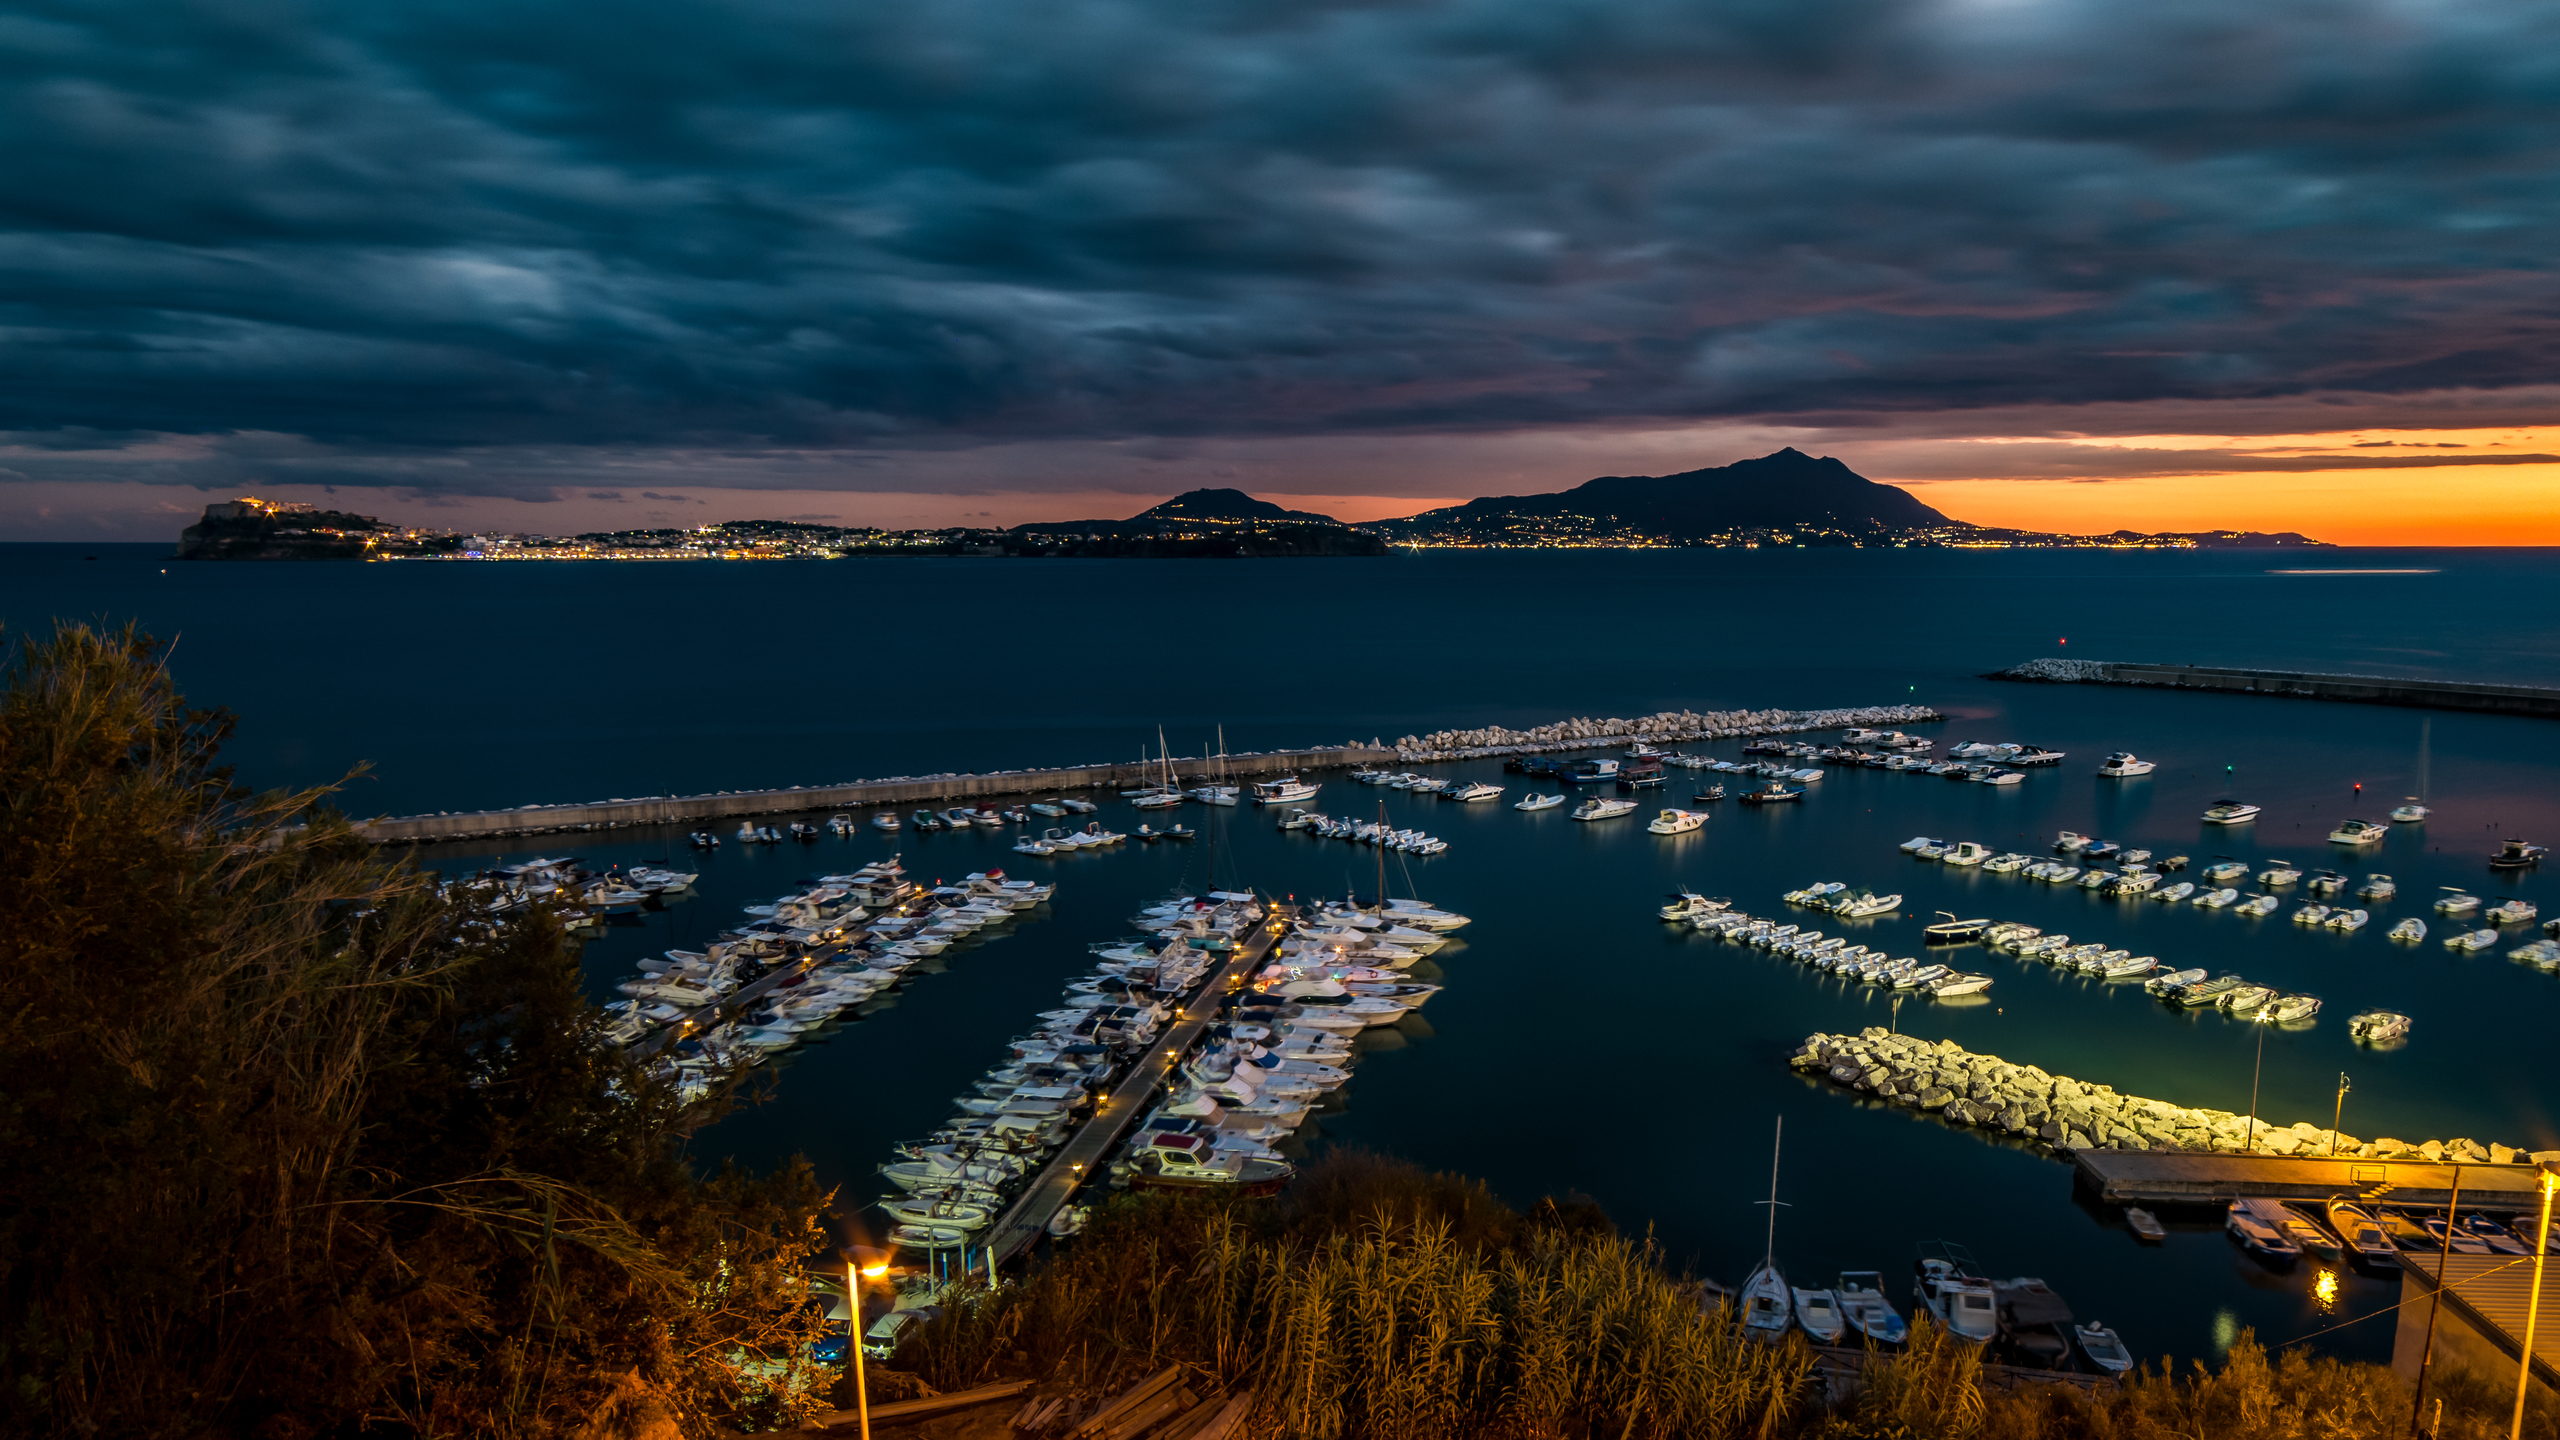 General 2560x1440 Naples Campania landscape Italy bay night lights